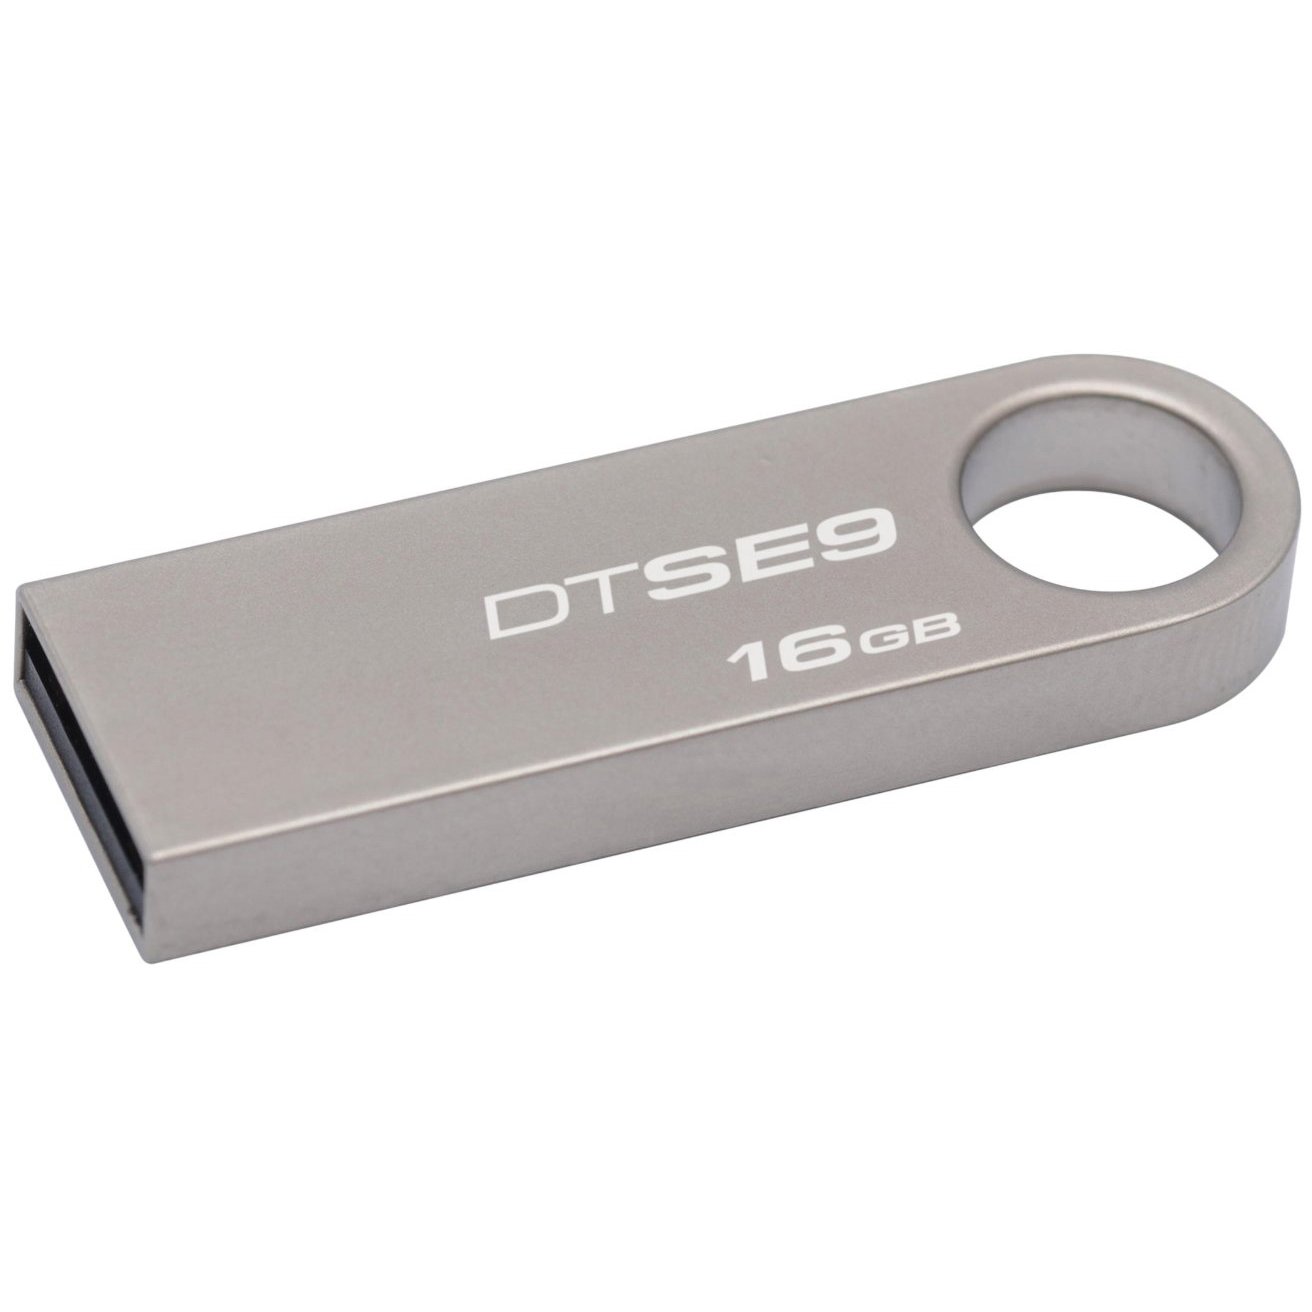 Original Kingston Data Traveler SE9H 16GB USB 2.0 Flash Drive (DTSE9H/16GB)